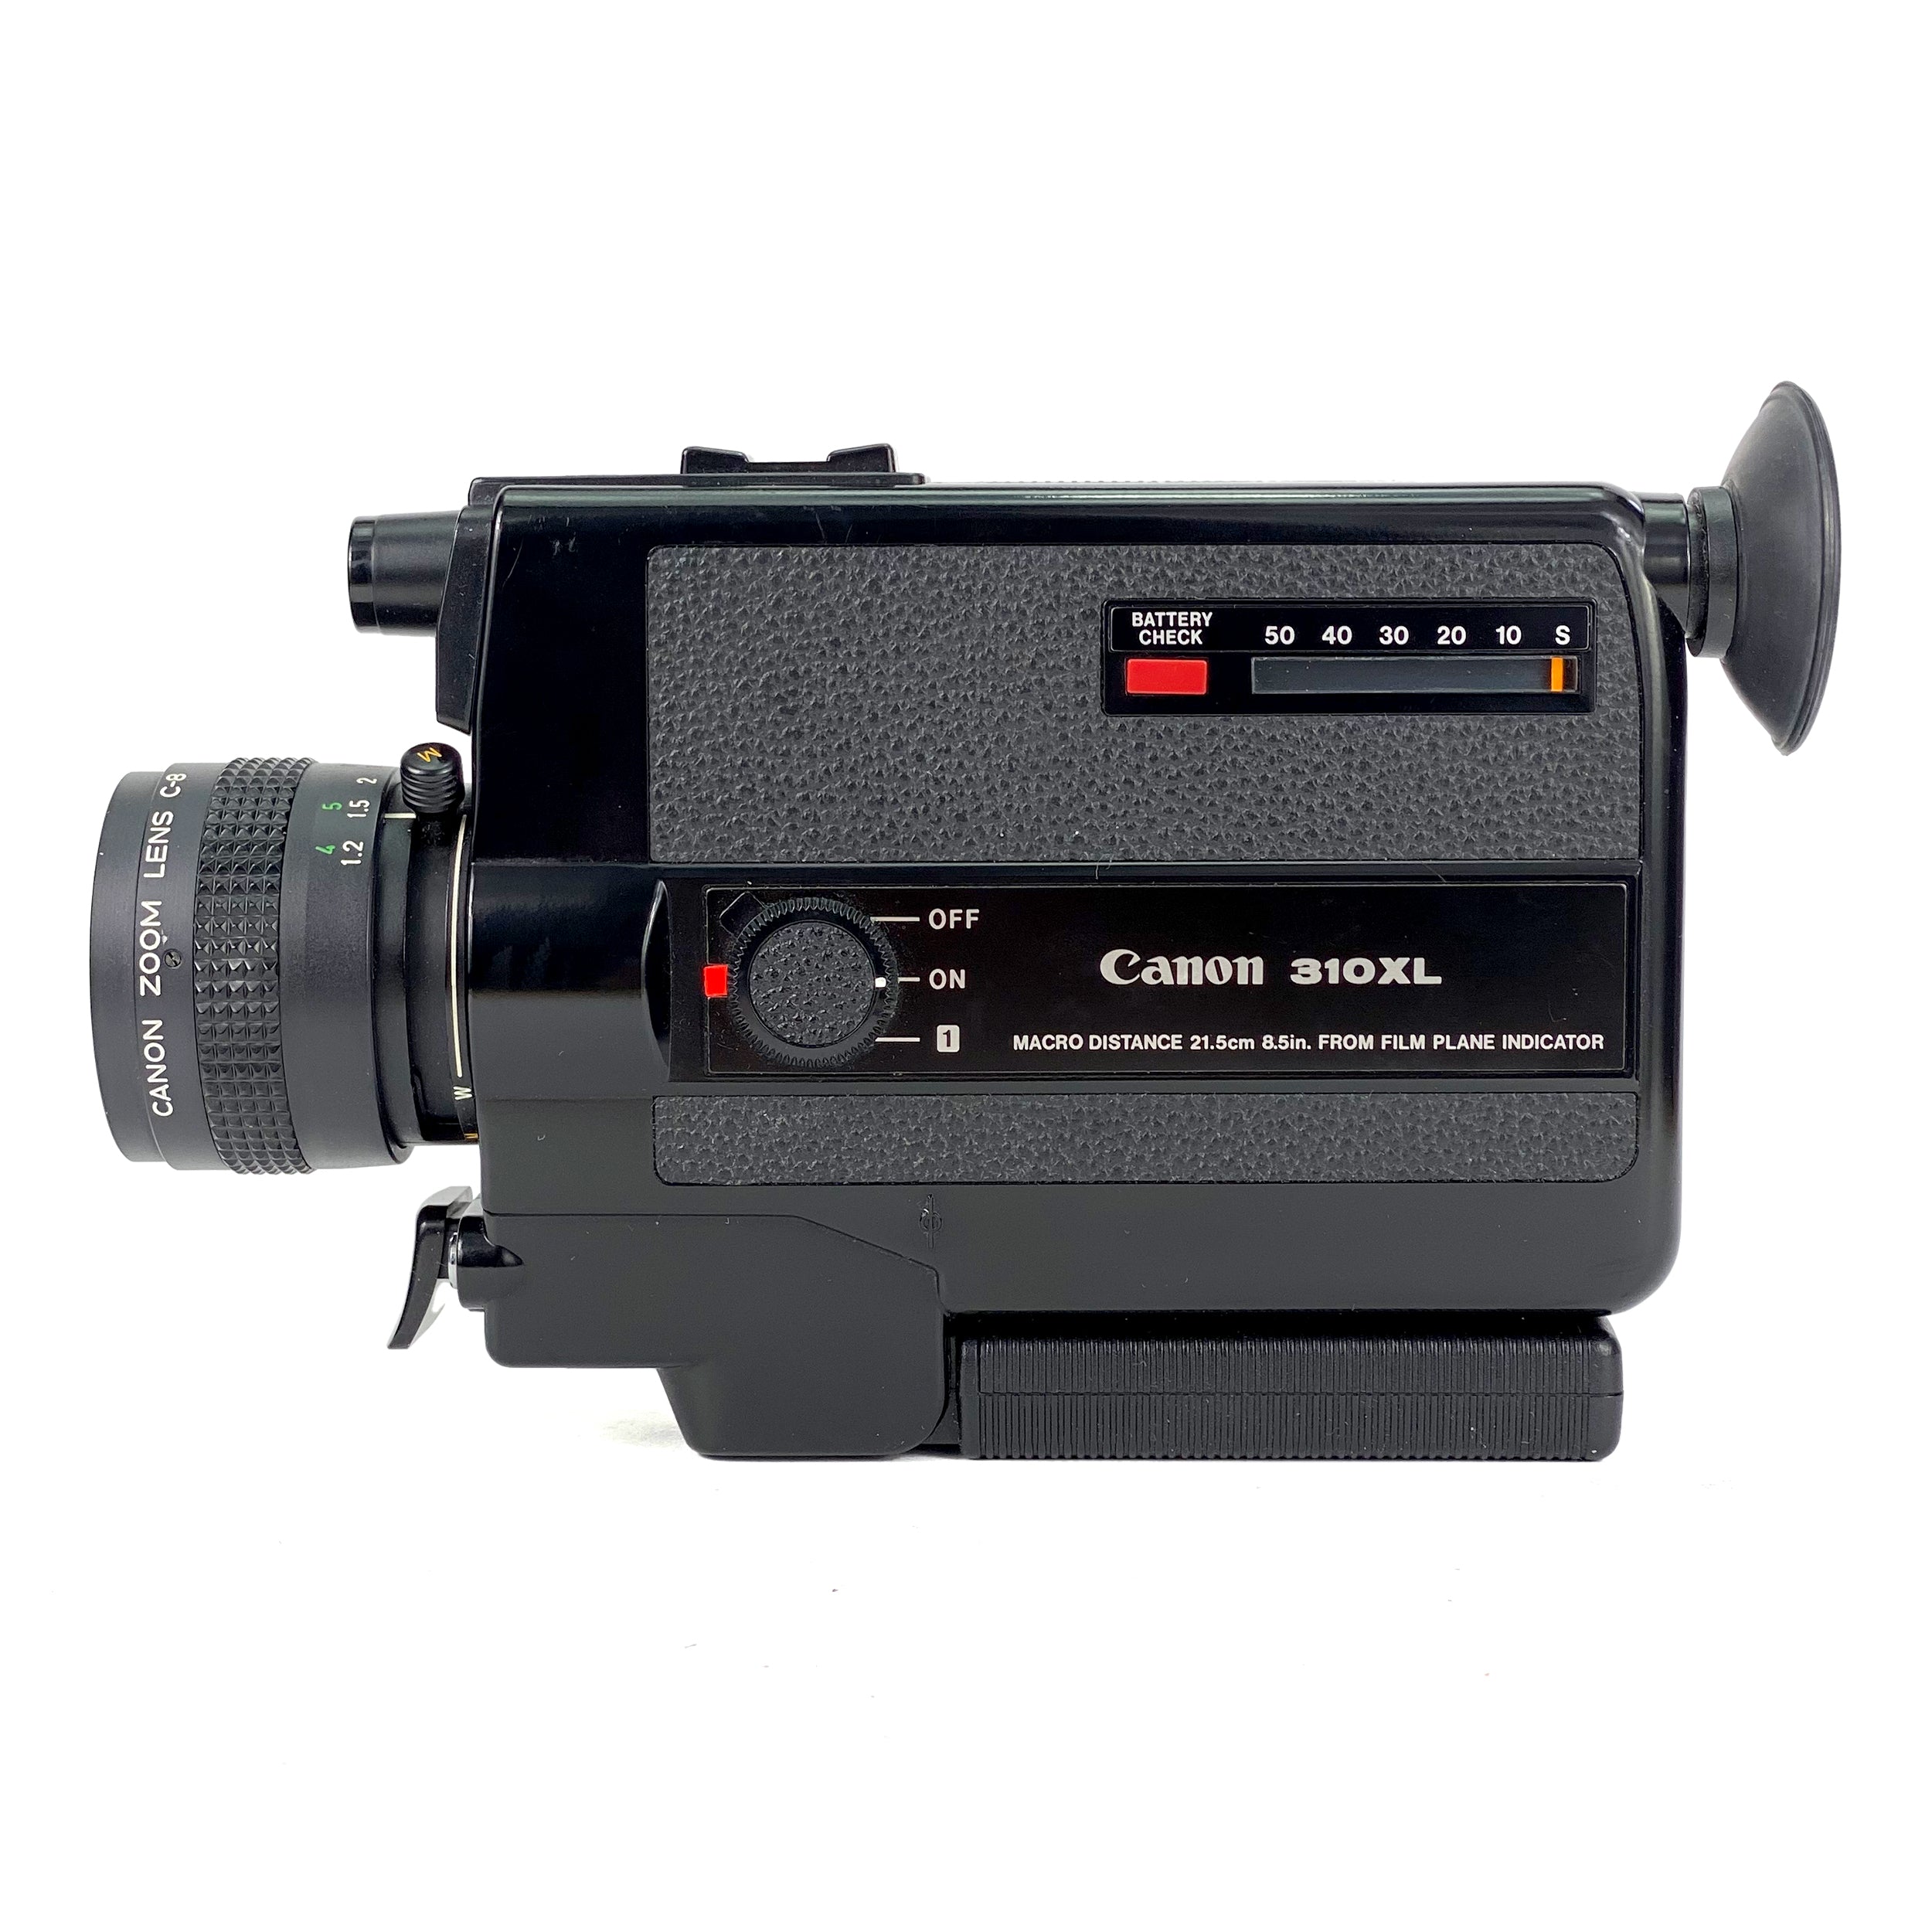 Canon 310XL Zoom 8.5-25.5mm 8ミリカメラ - ビデオカメラ